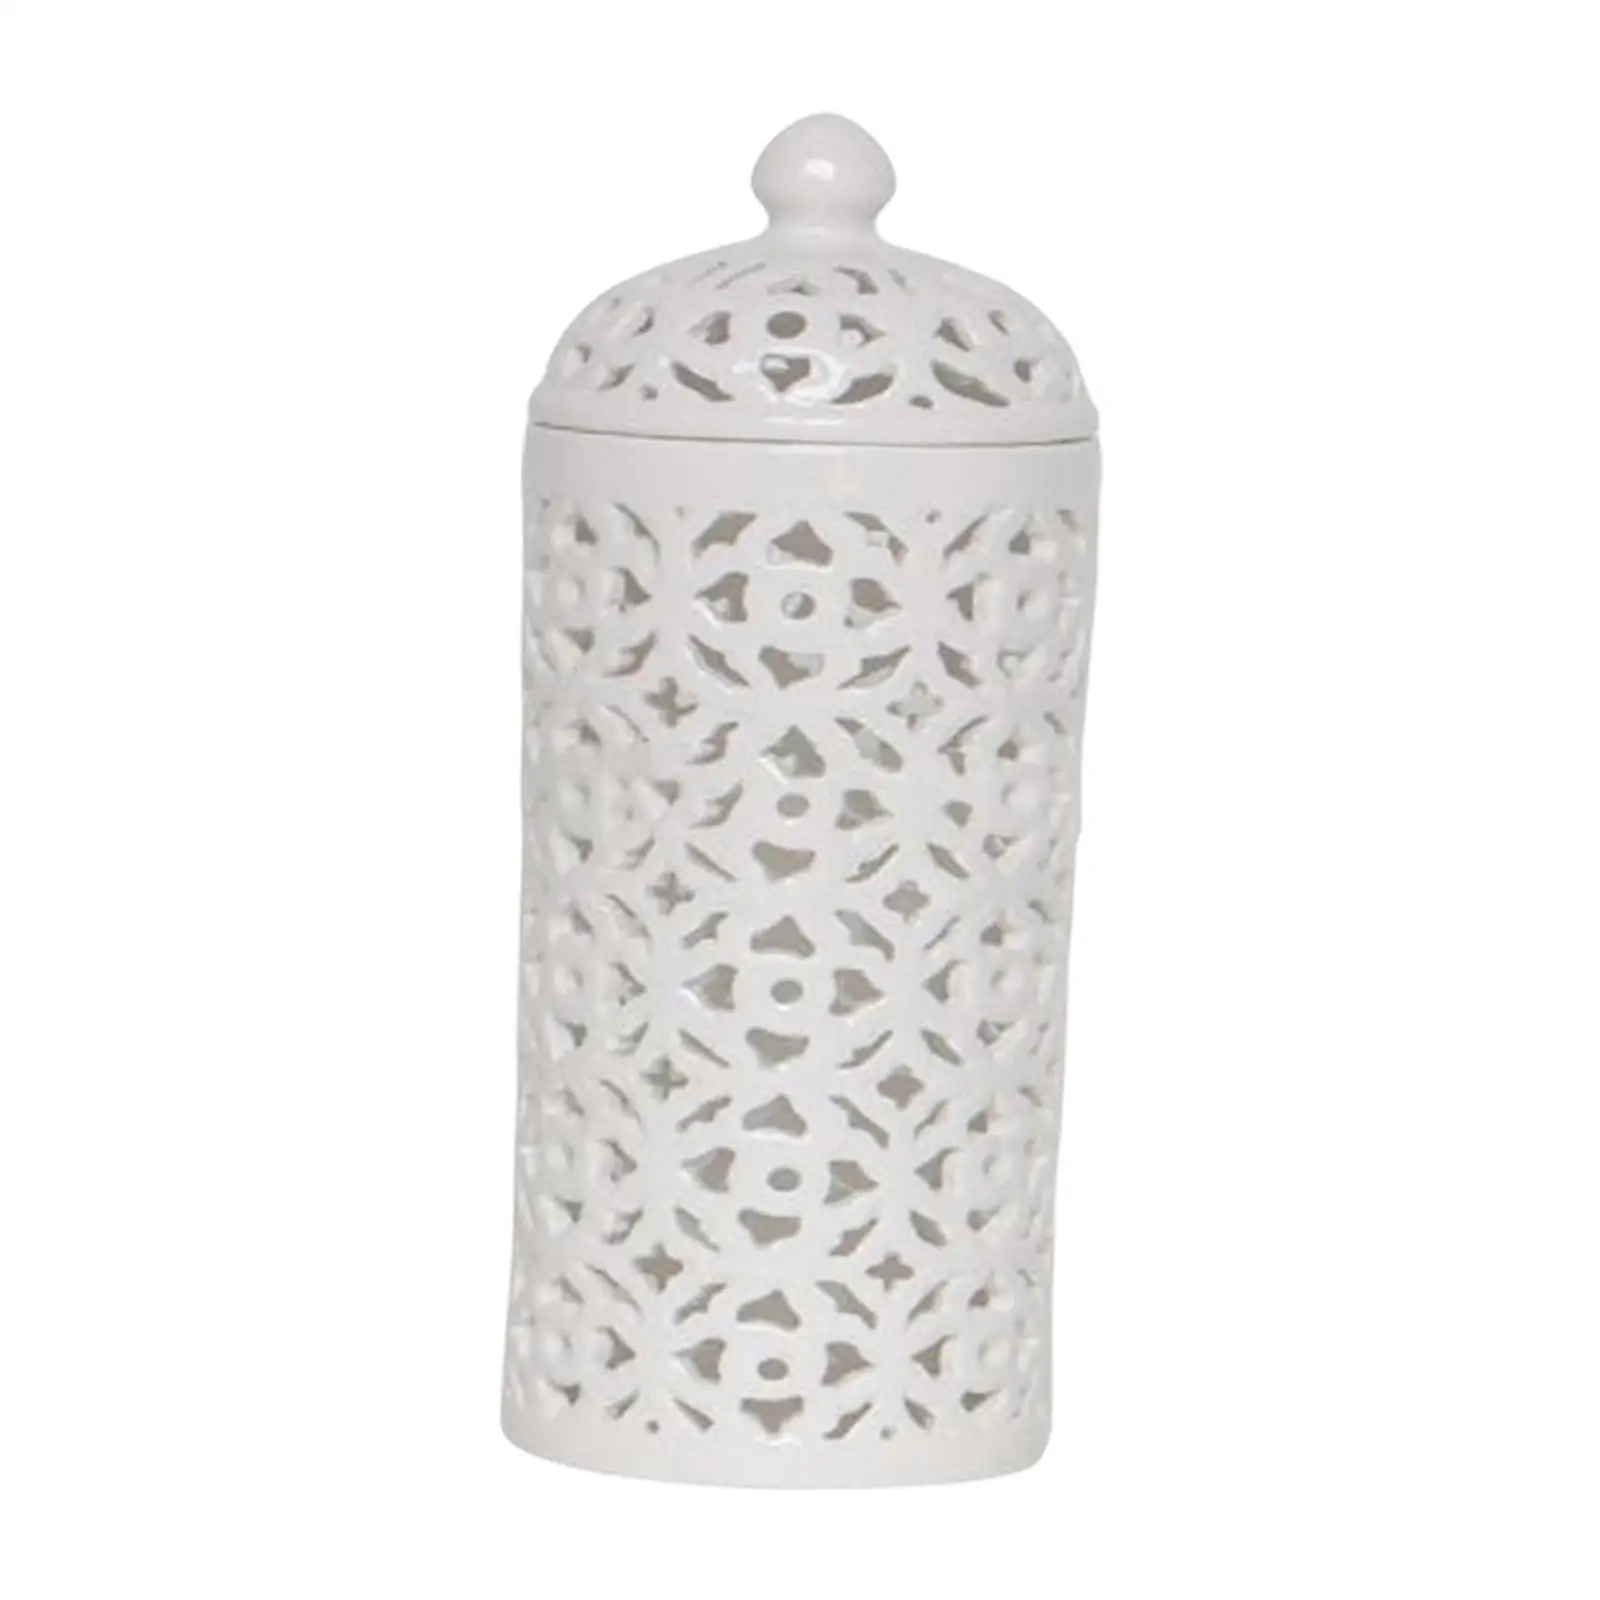 Ceramic Hollow Pierced Vase with Lid Temple Jar, Traditional Decorative Jar